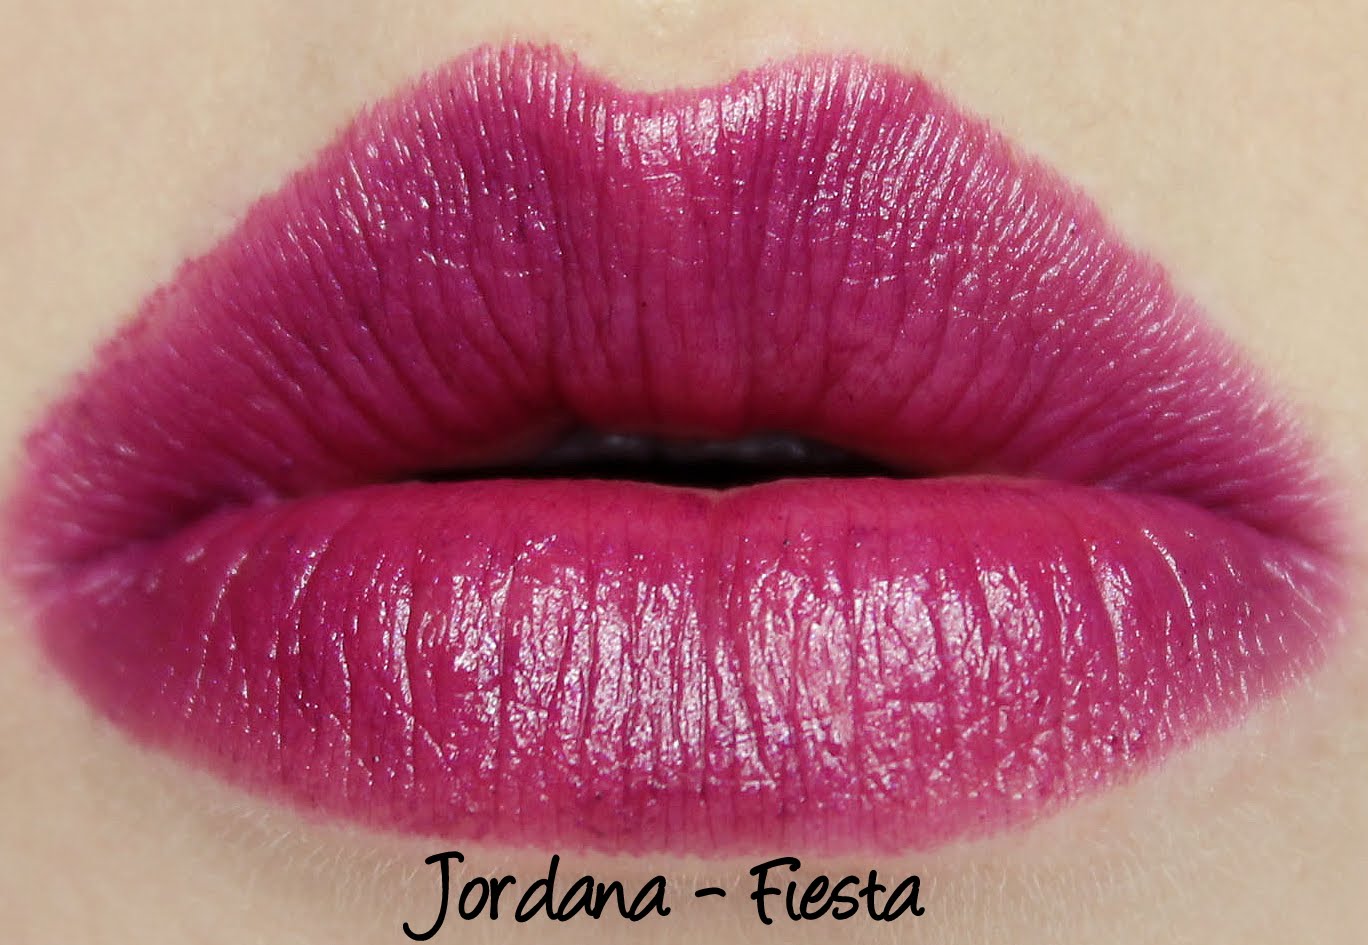 Jordana - Fiesta lipstick swatch